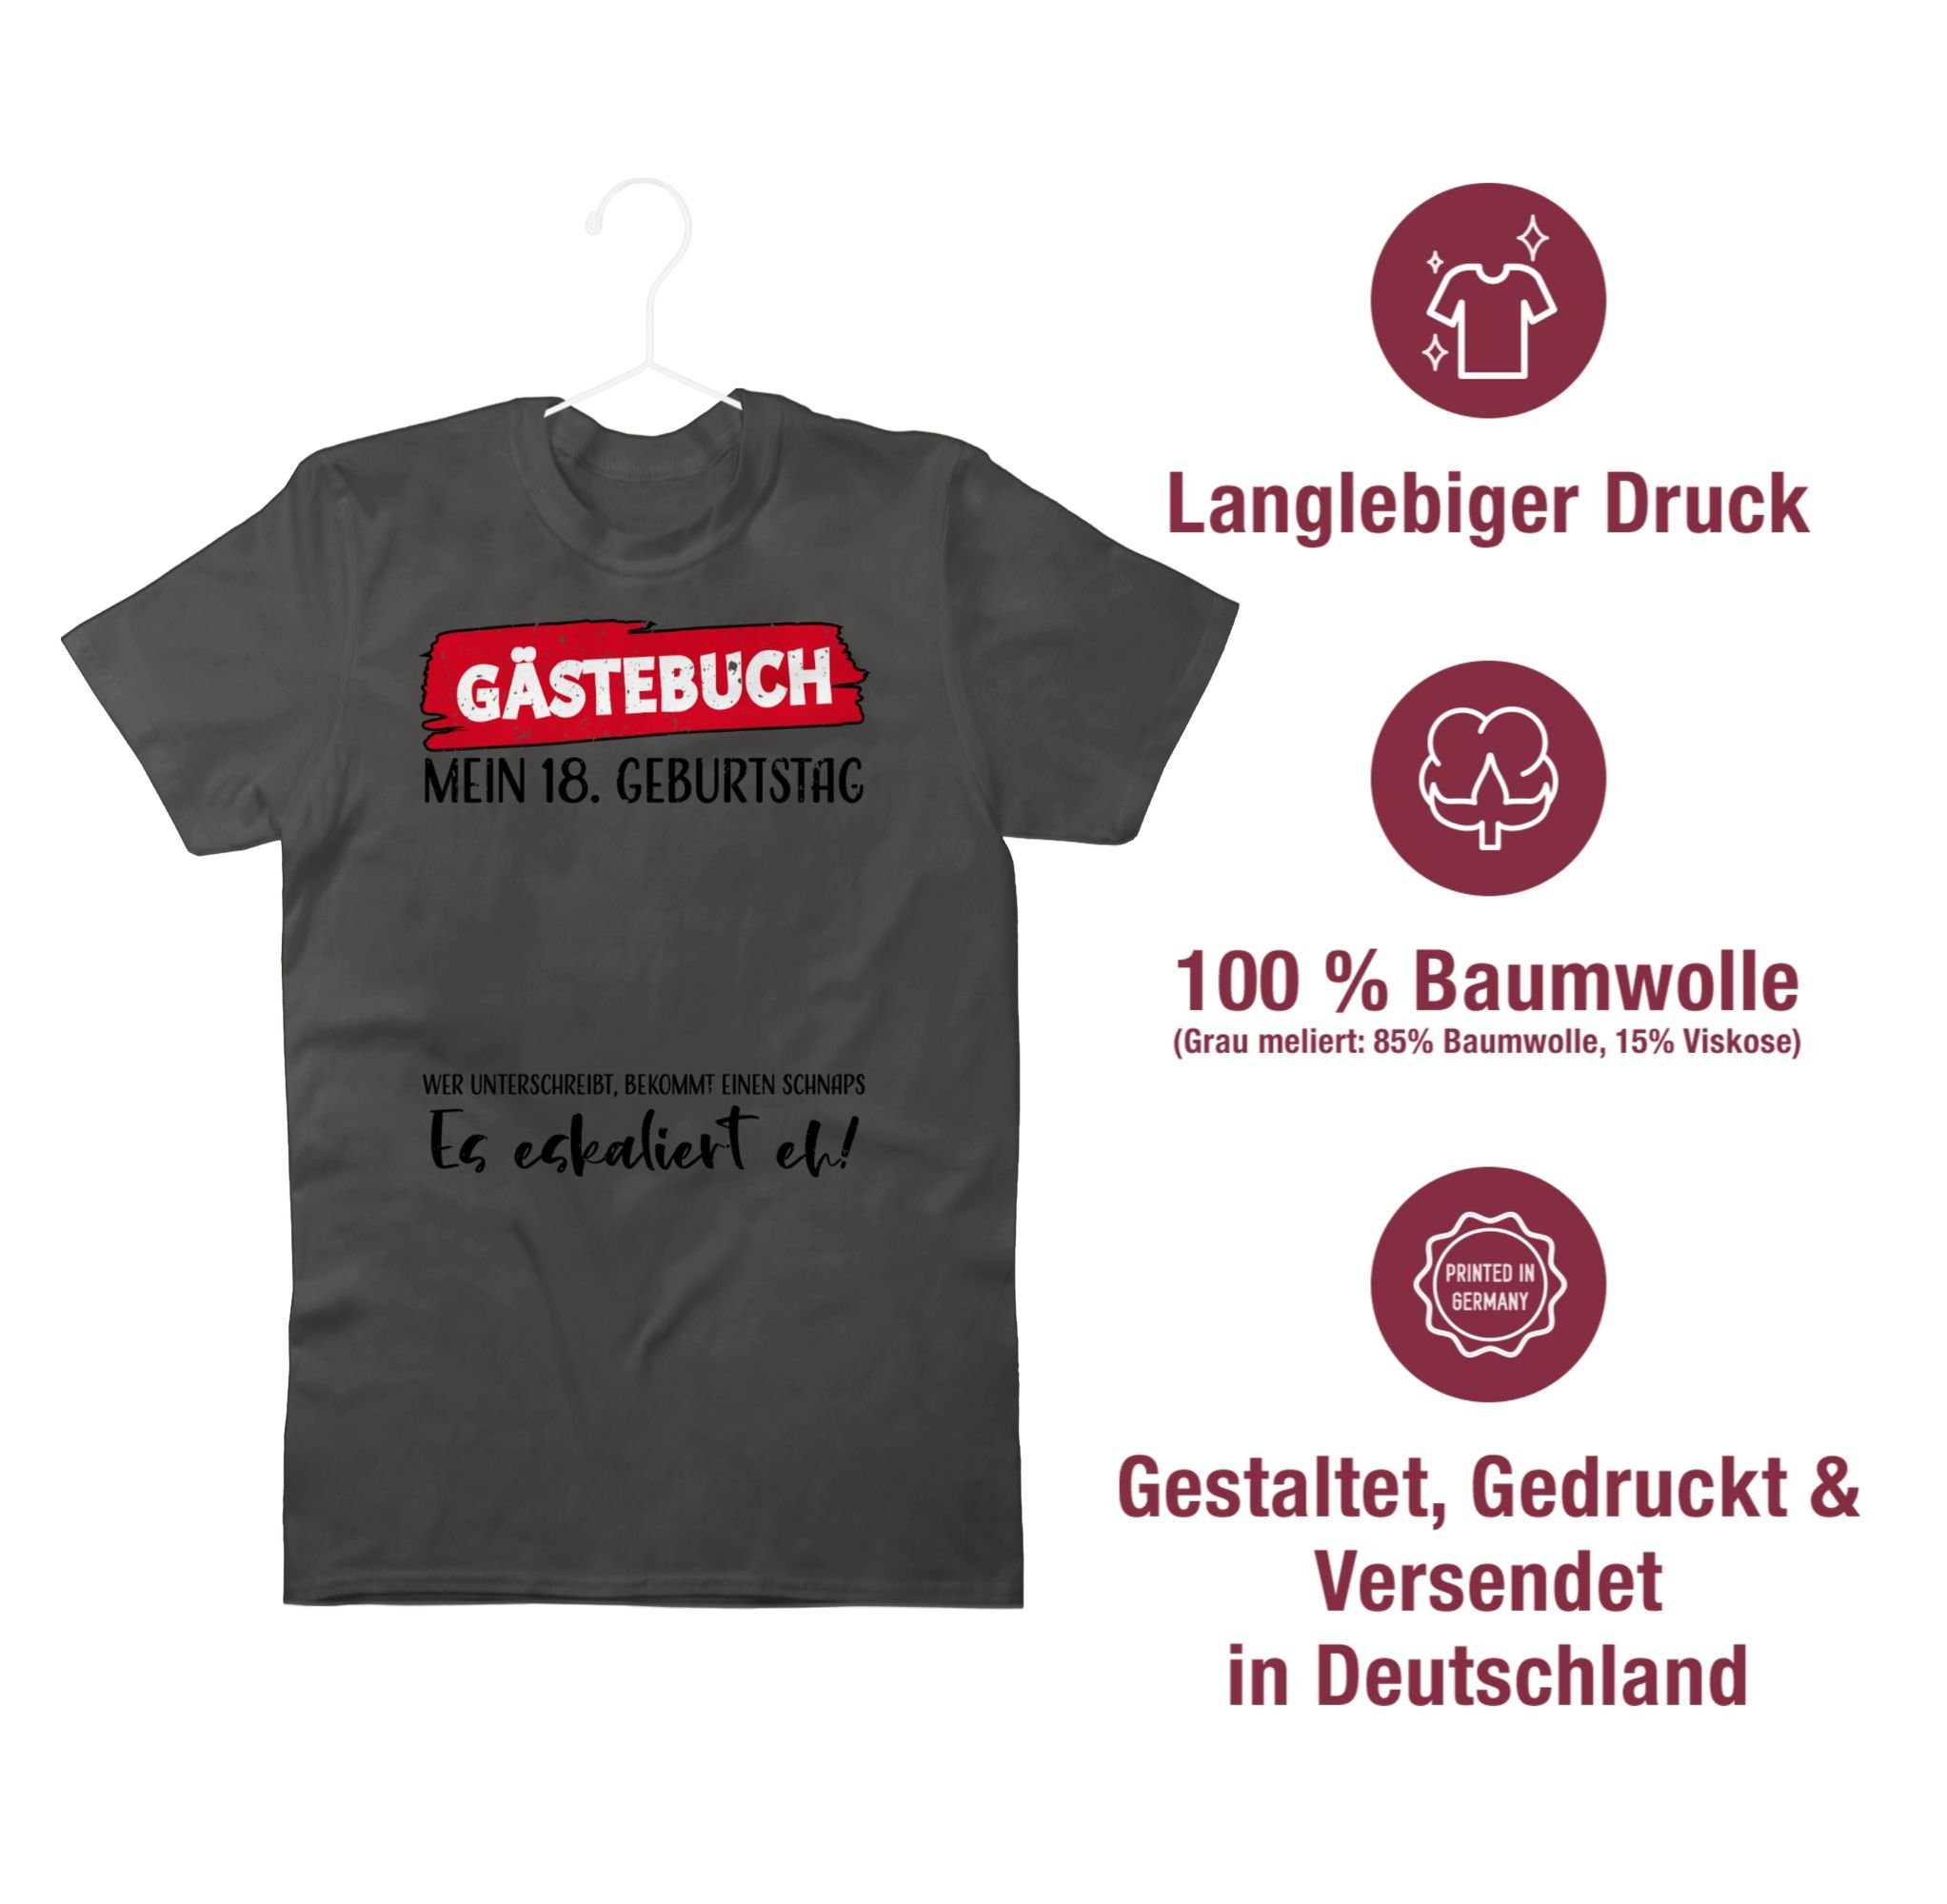 Geburtstag Gästebuch 18. 18. 01 T-Shirt Geburtstag Dunkelgrau Shirtracer